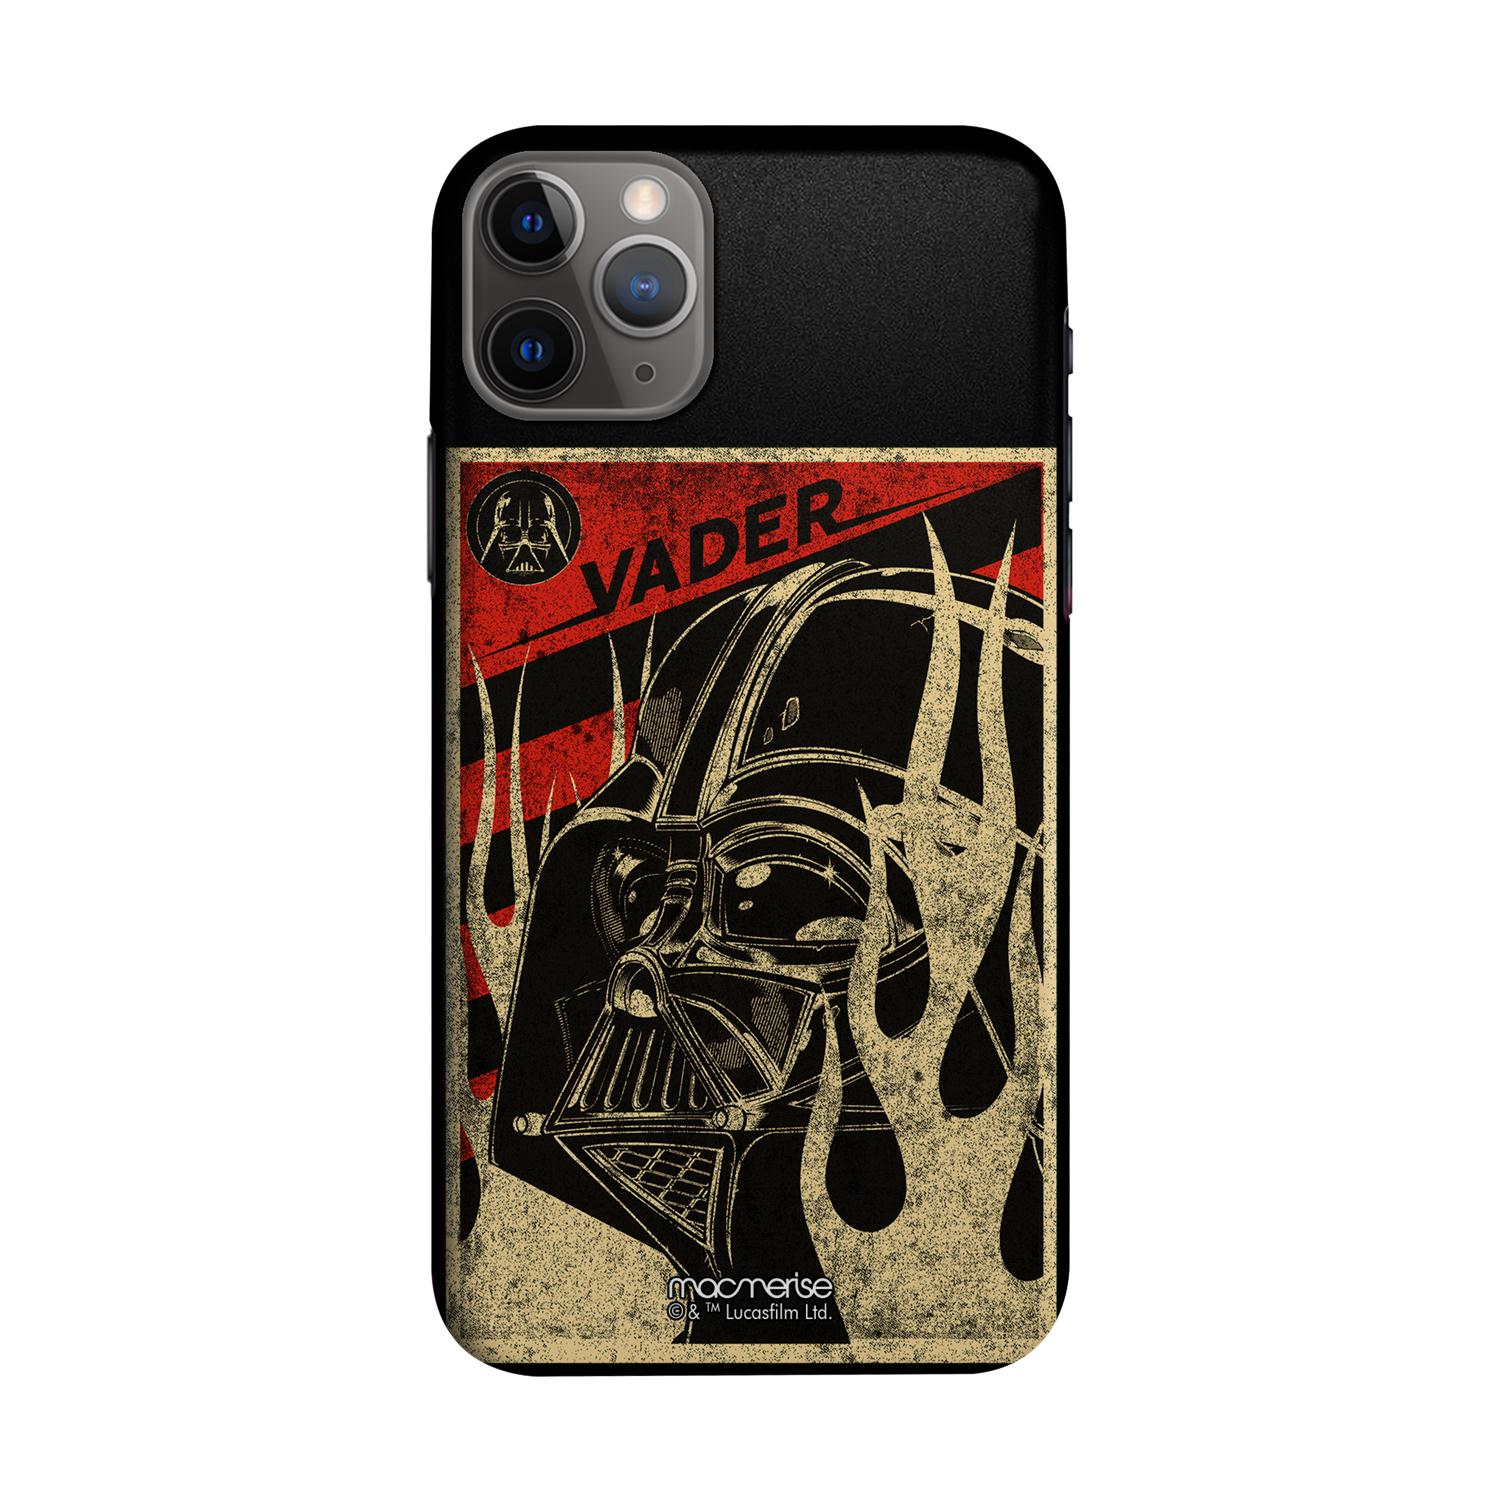 Buy Vader Stamp - Sleek Phone Case for iPhone 11 Pro Max Online